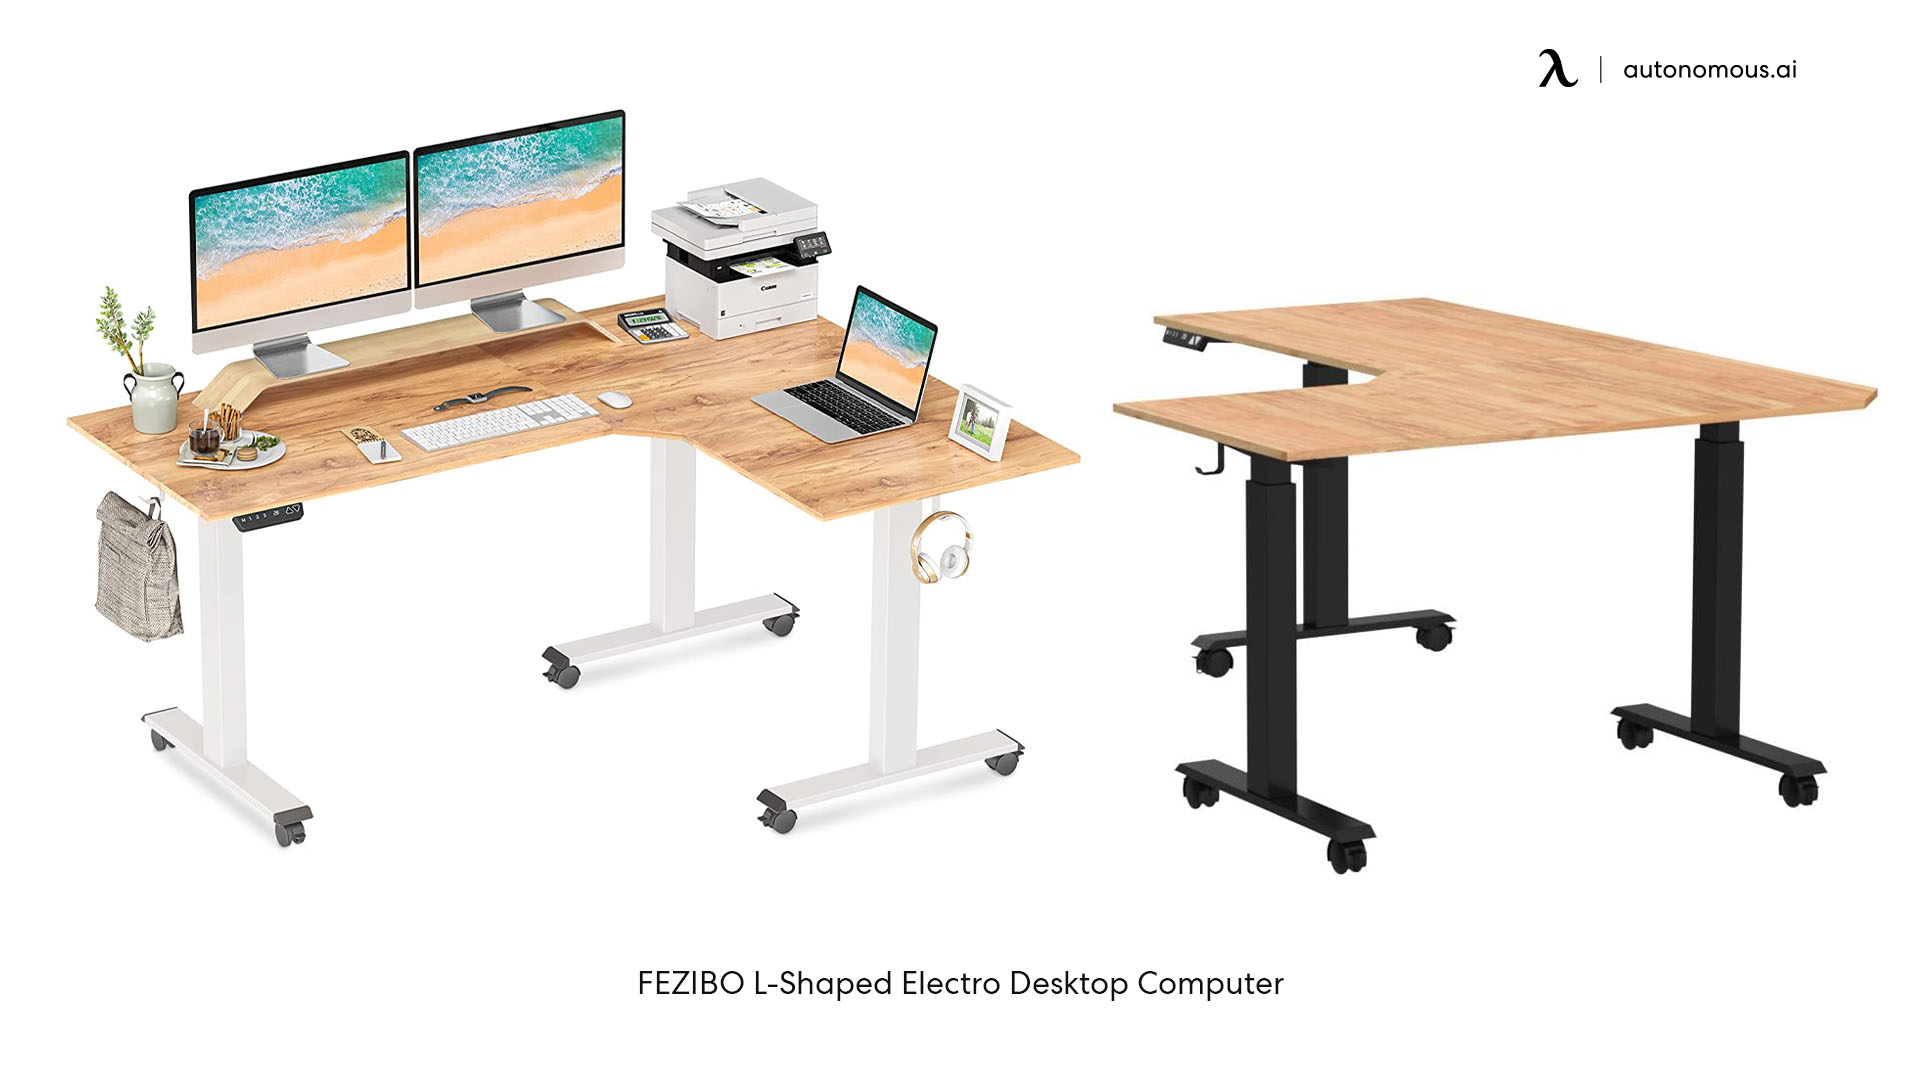 Fezibo industrial style l shaped desk